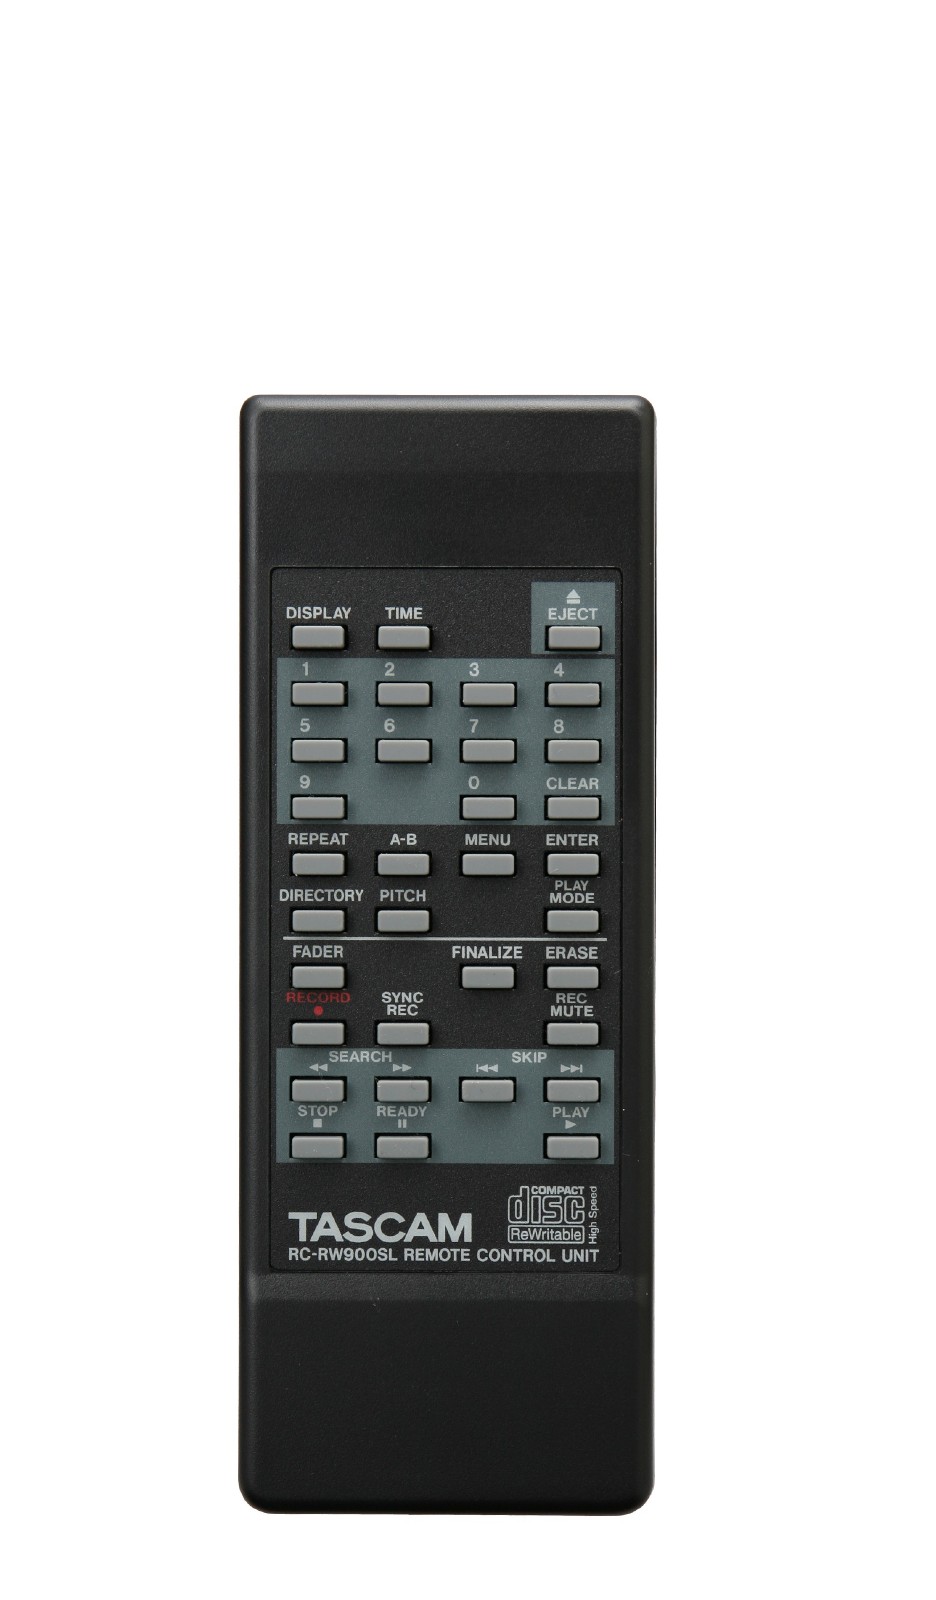 CD-RW900SL | Slot Loading CD Recorder | TASCAM | International Website